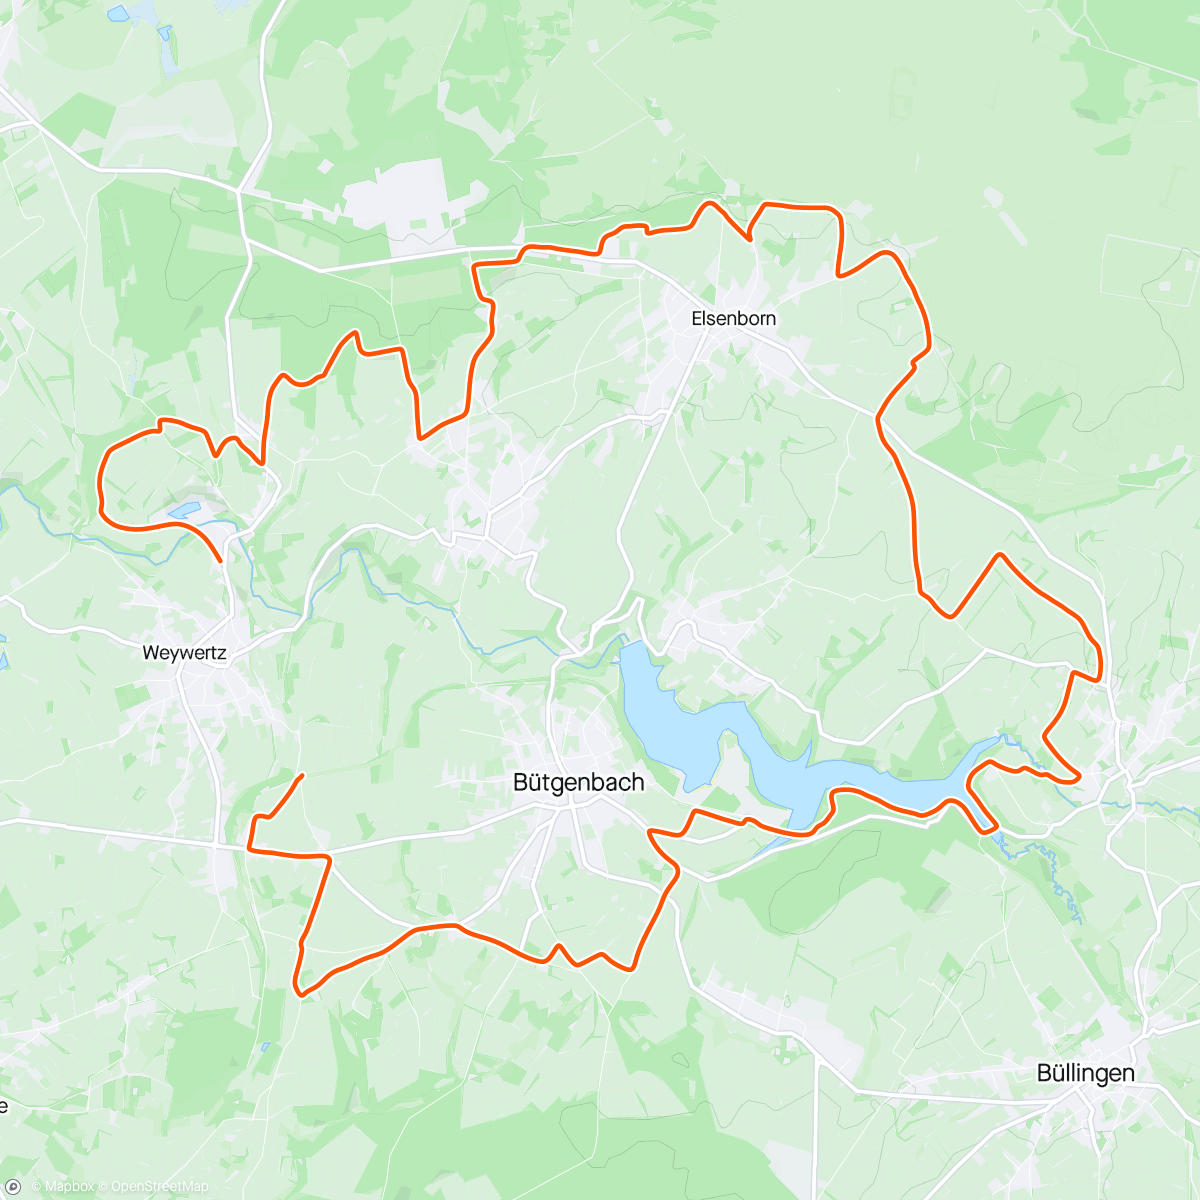 「Gravel Bütgenbach」活動的地圖